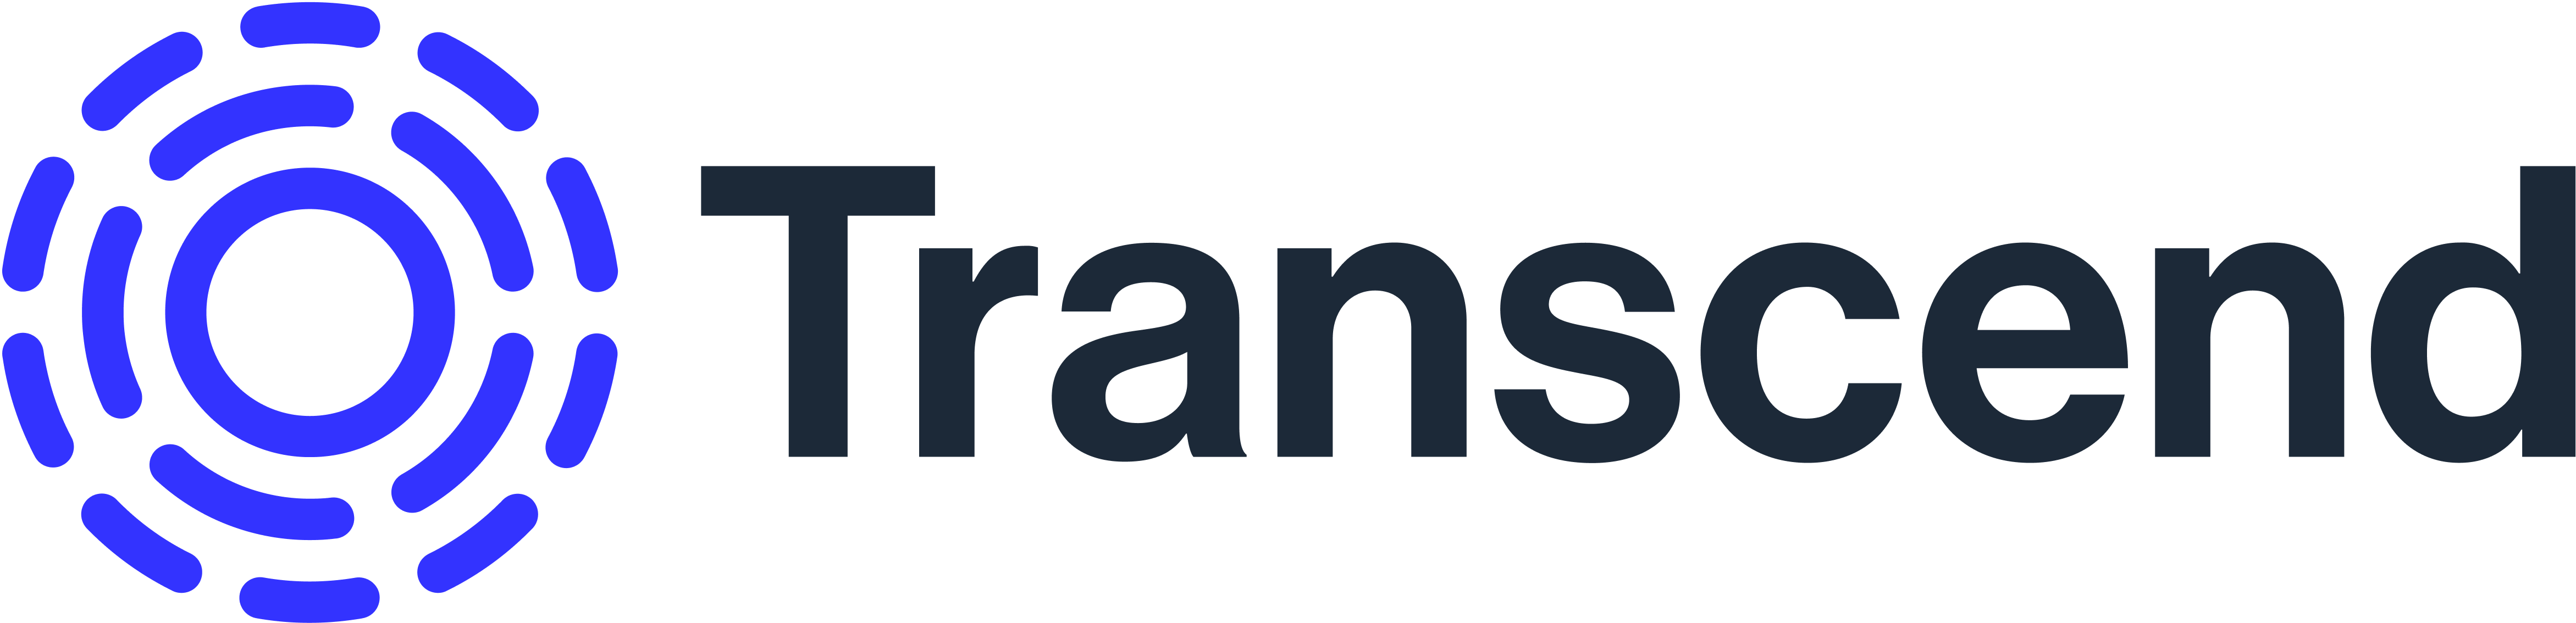 The Transcend logo